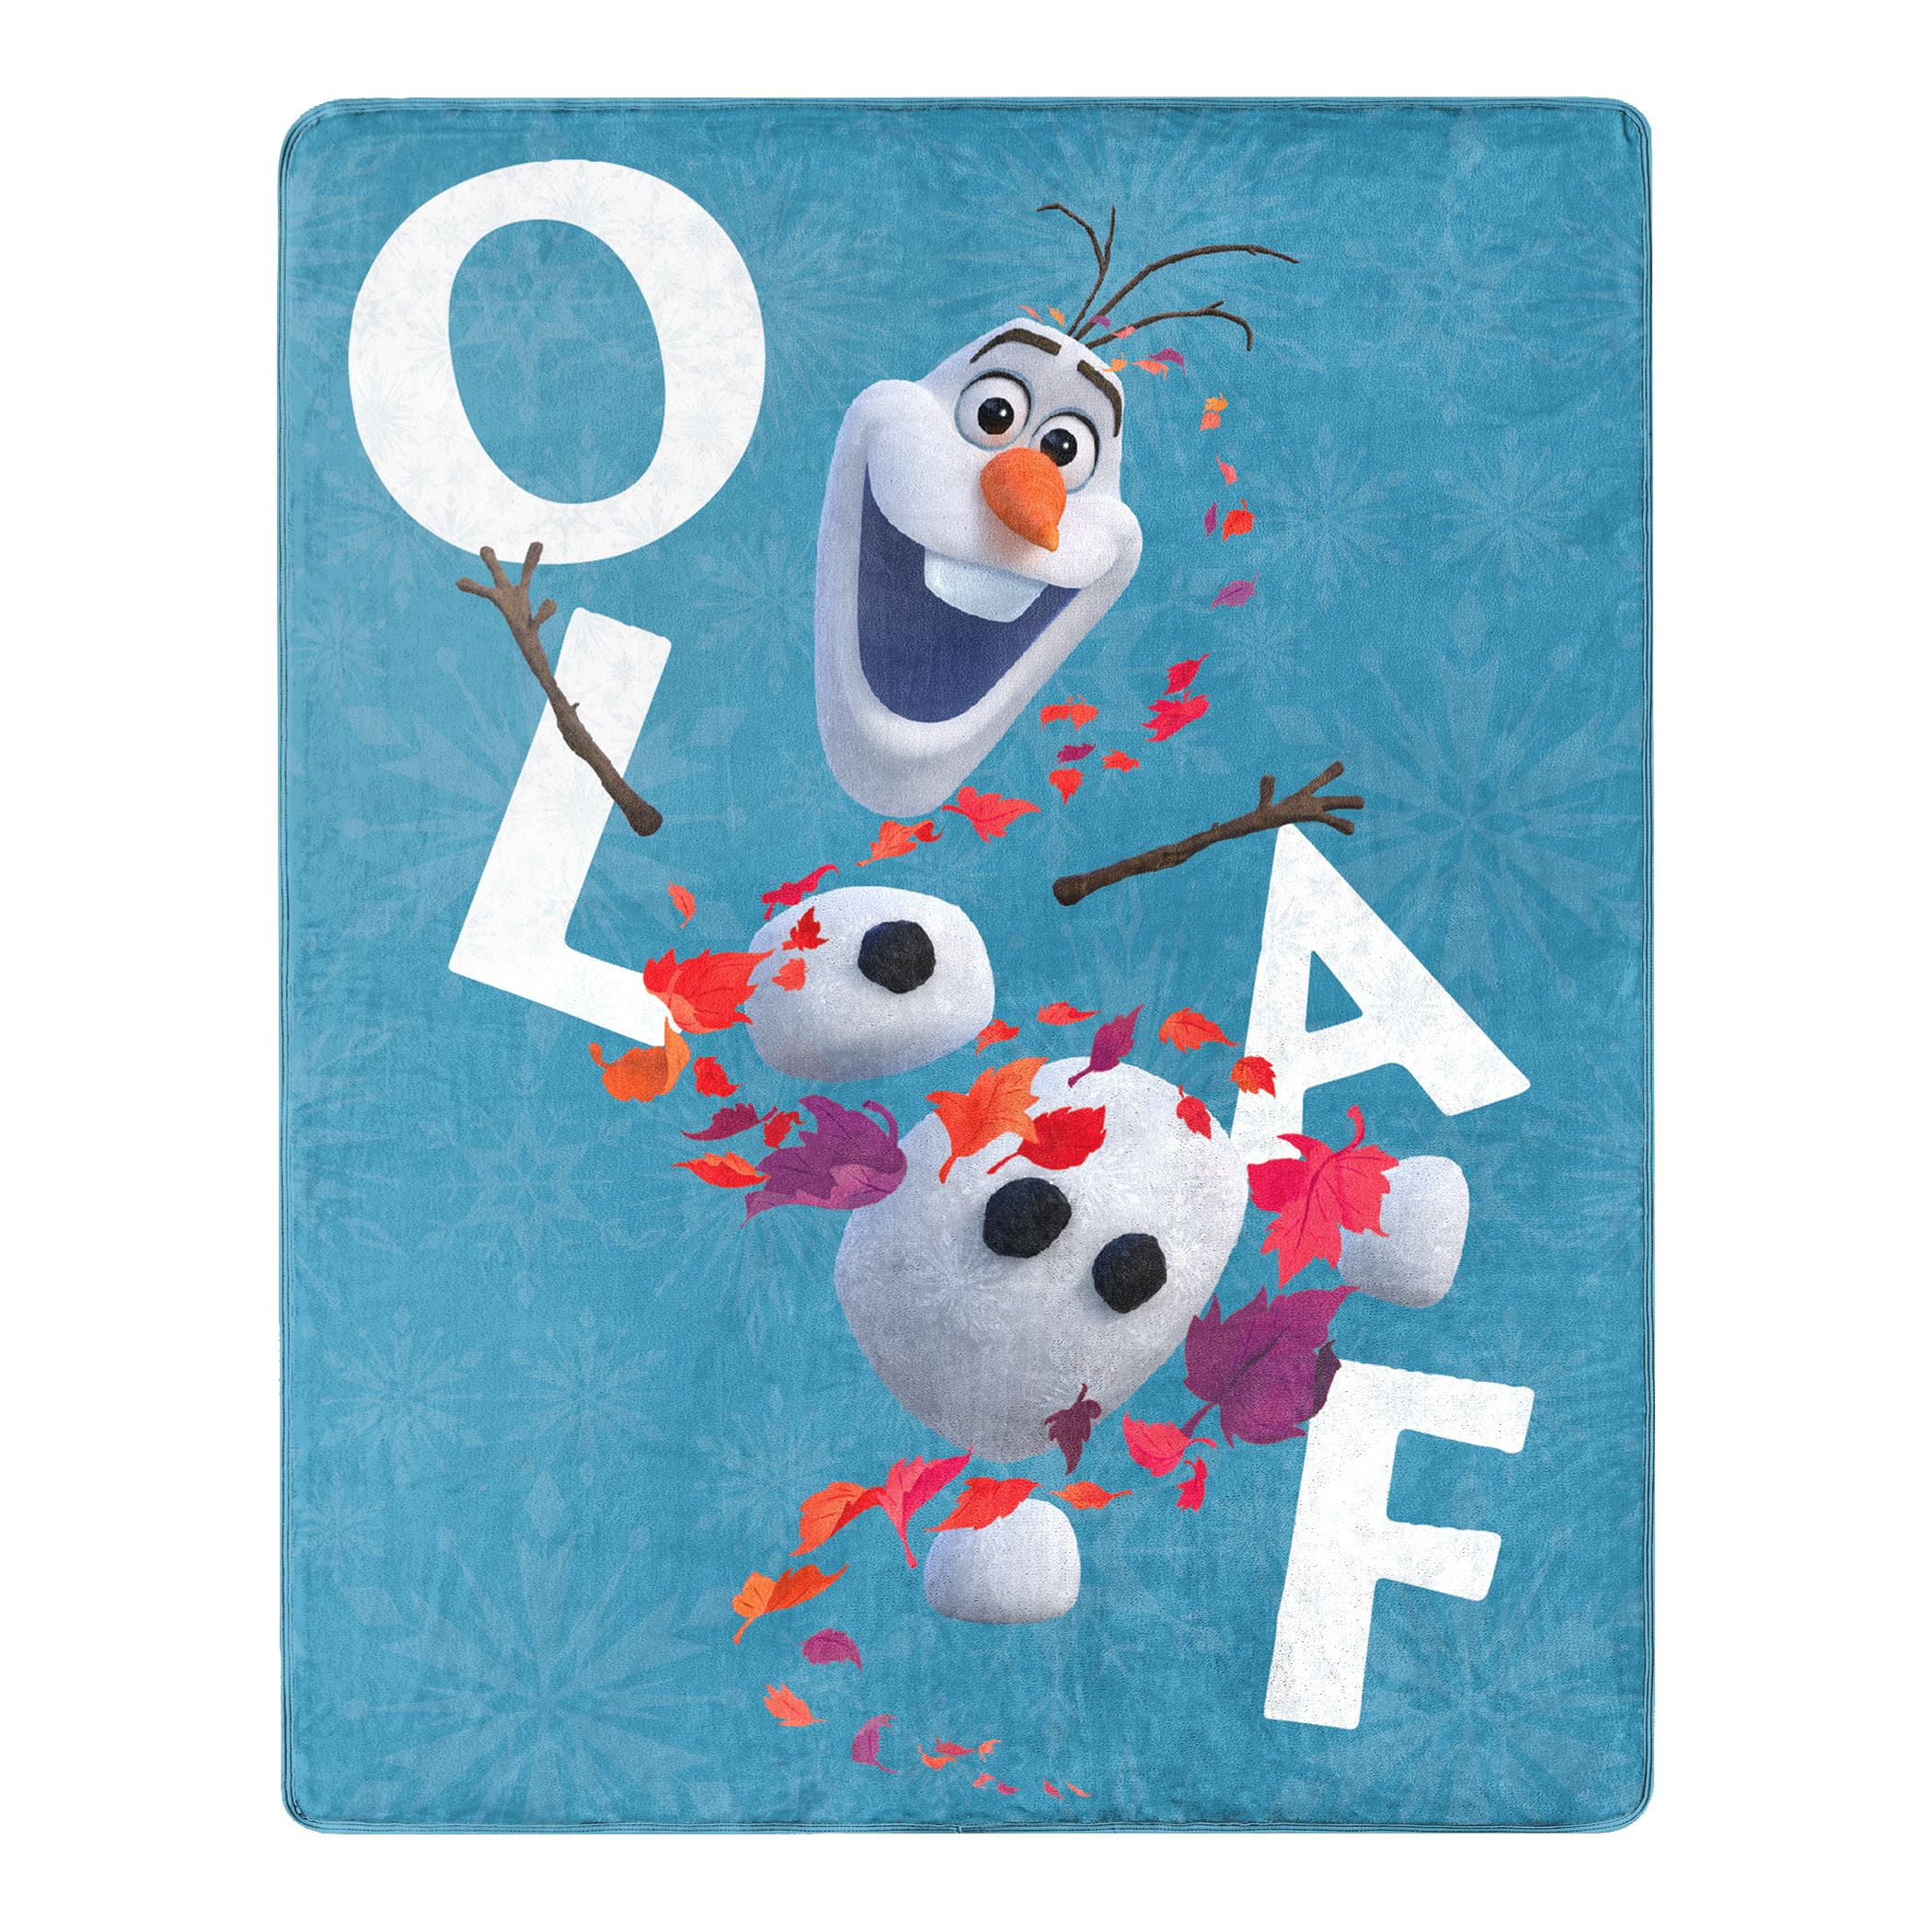 Disney's Frozen Elsa Anna Olaf & Kristoff Tapestry Throw Blanket Warm & Cozy 